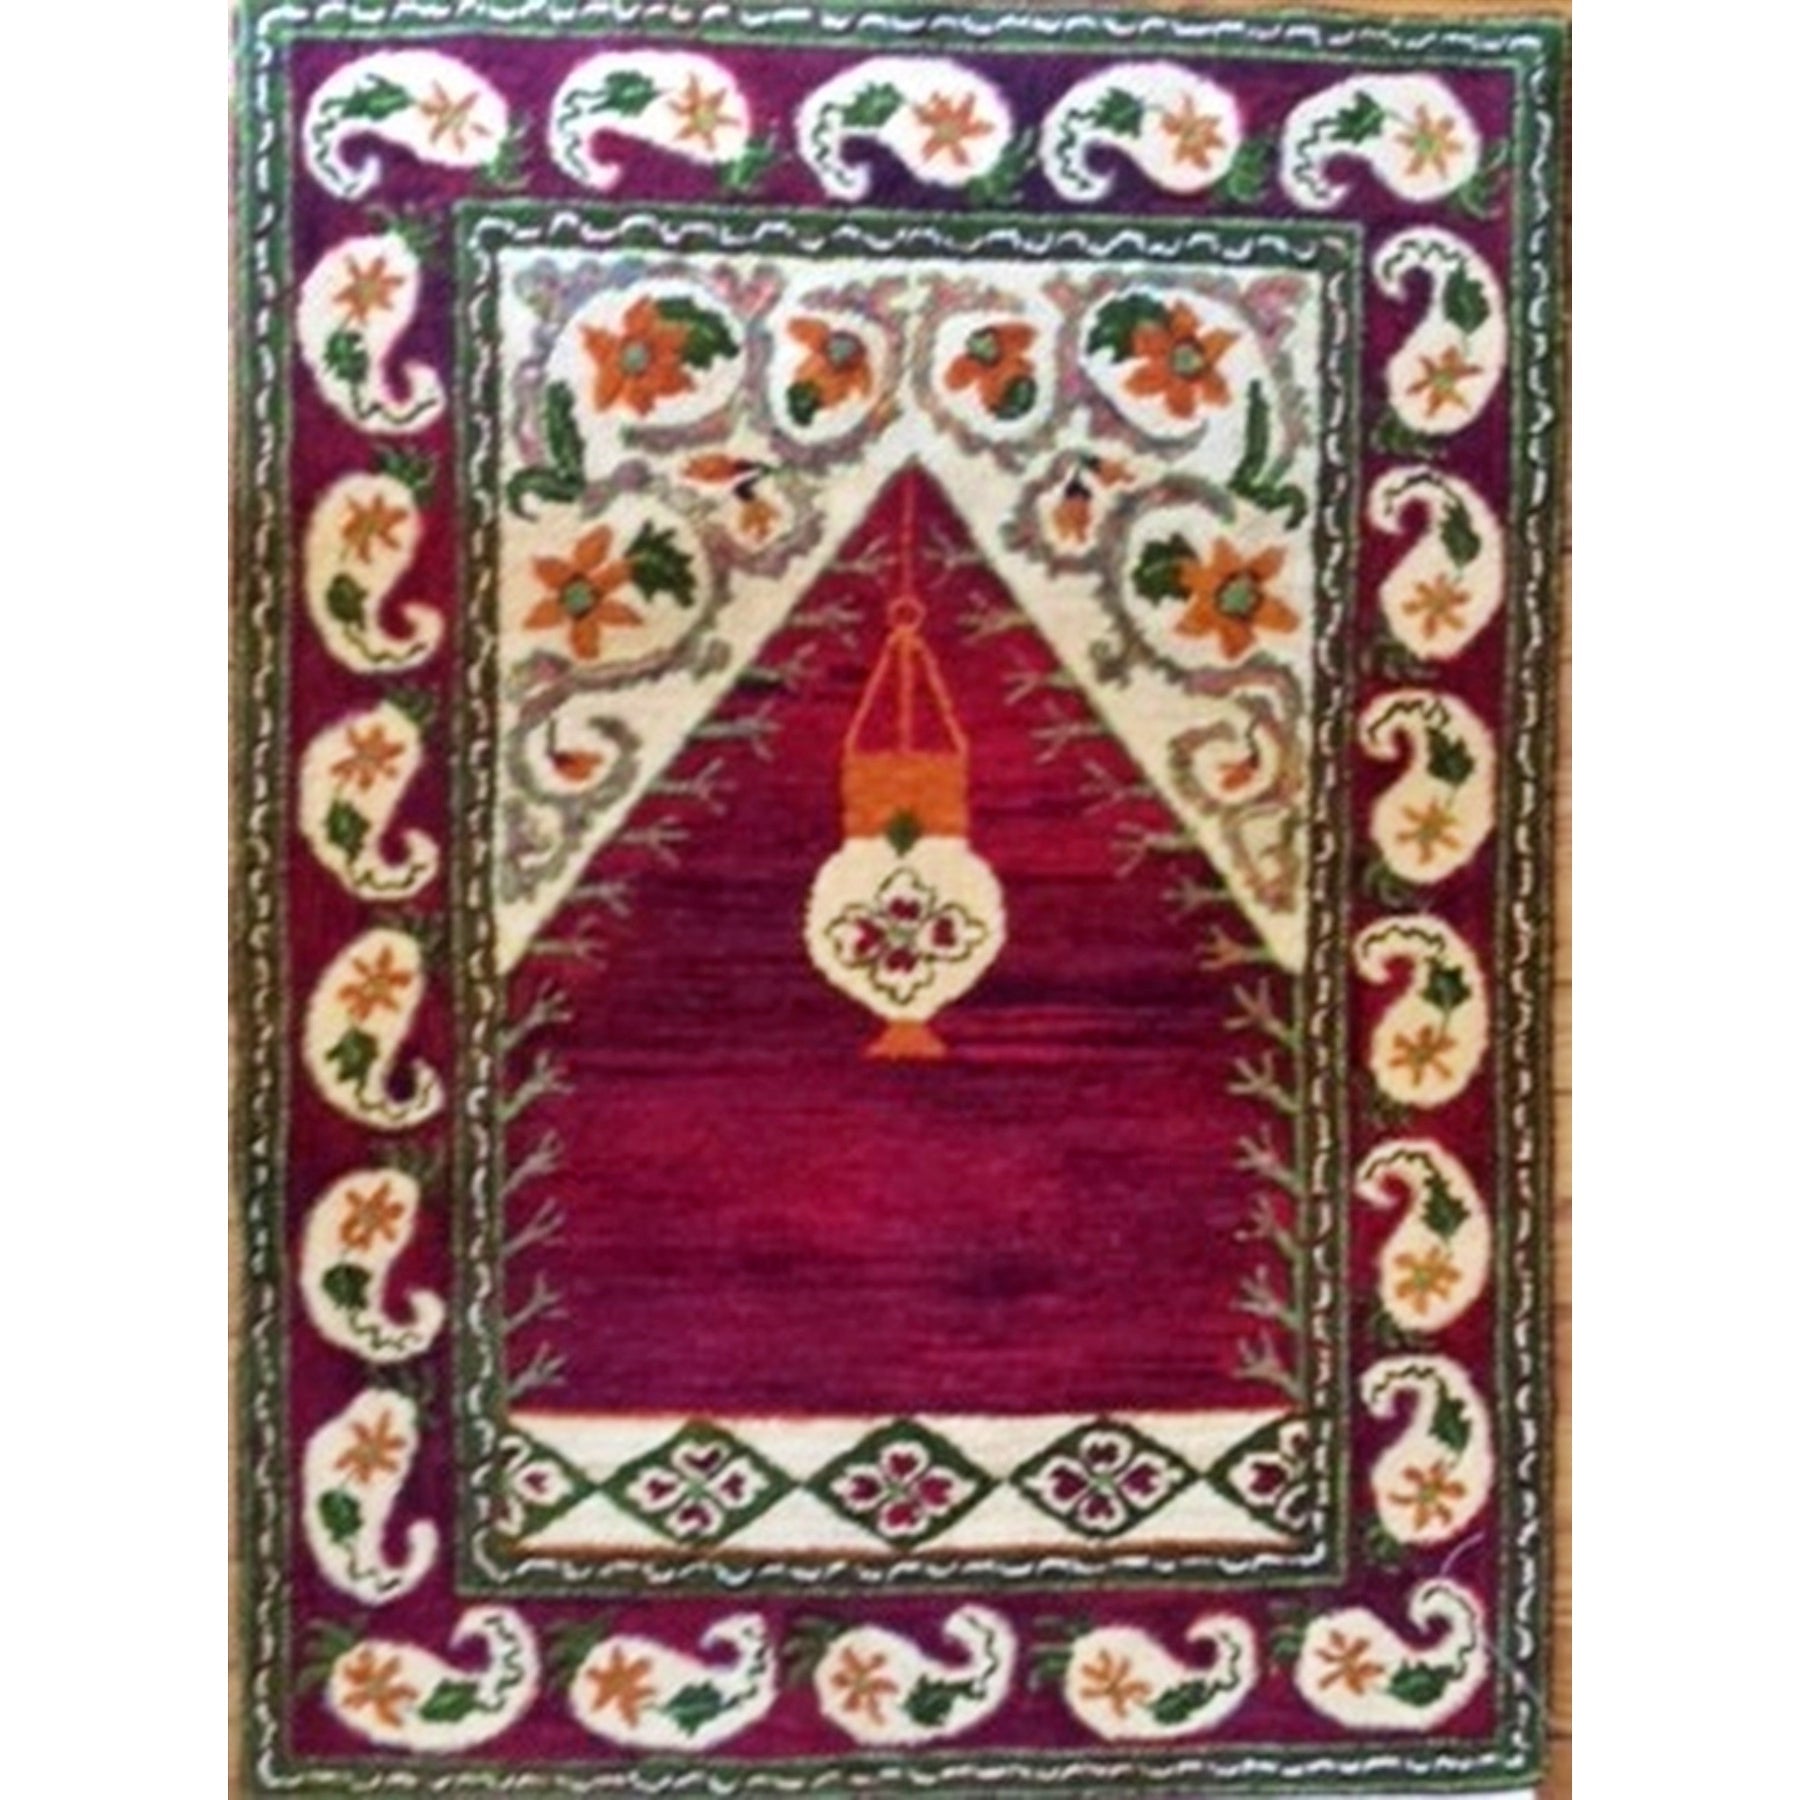 Persian Prayer Rug, rug hooked by Karen Guffey